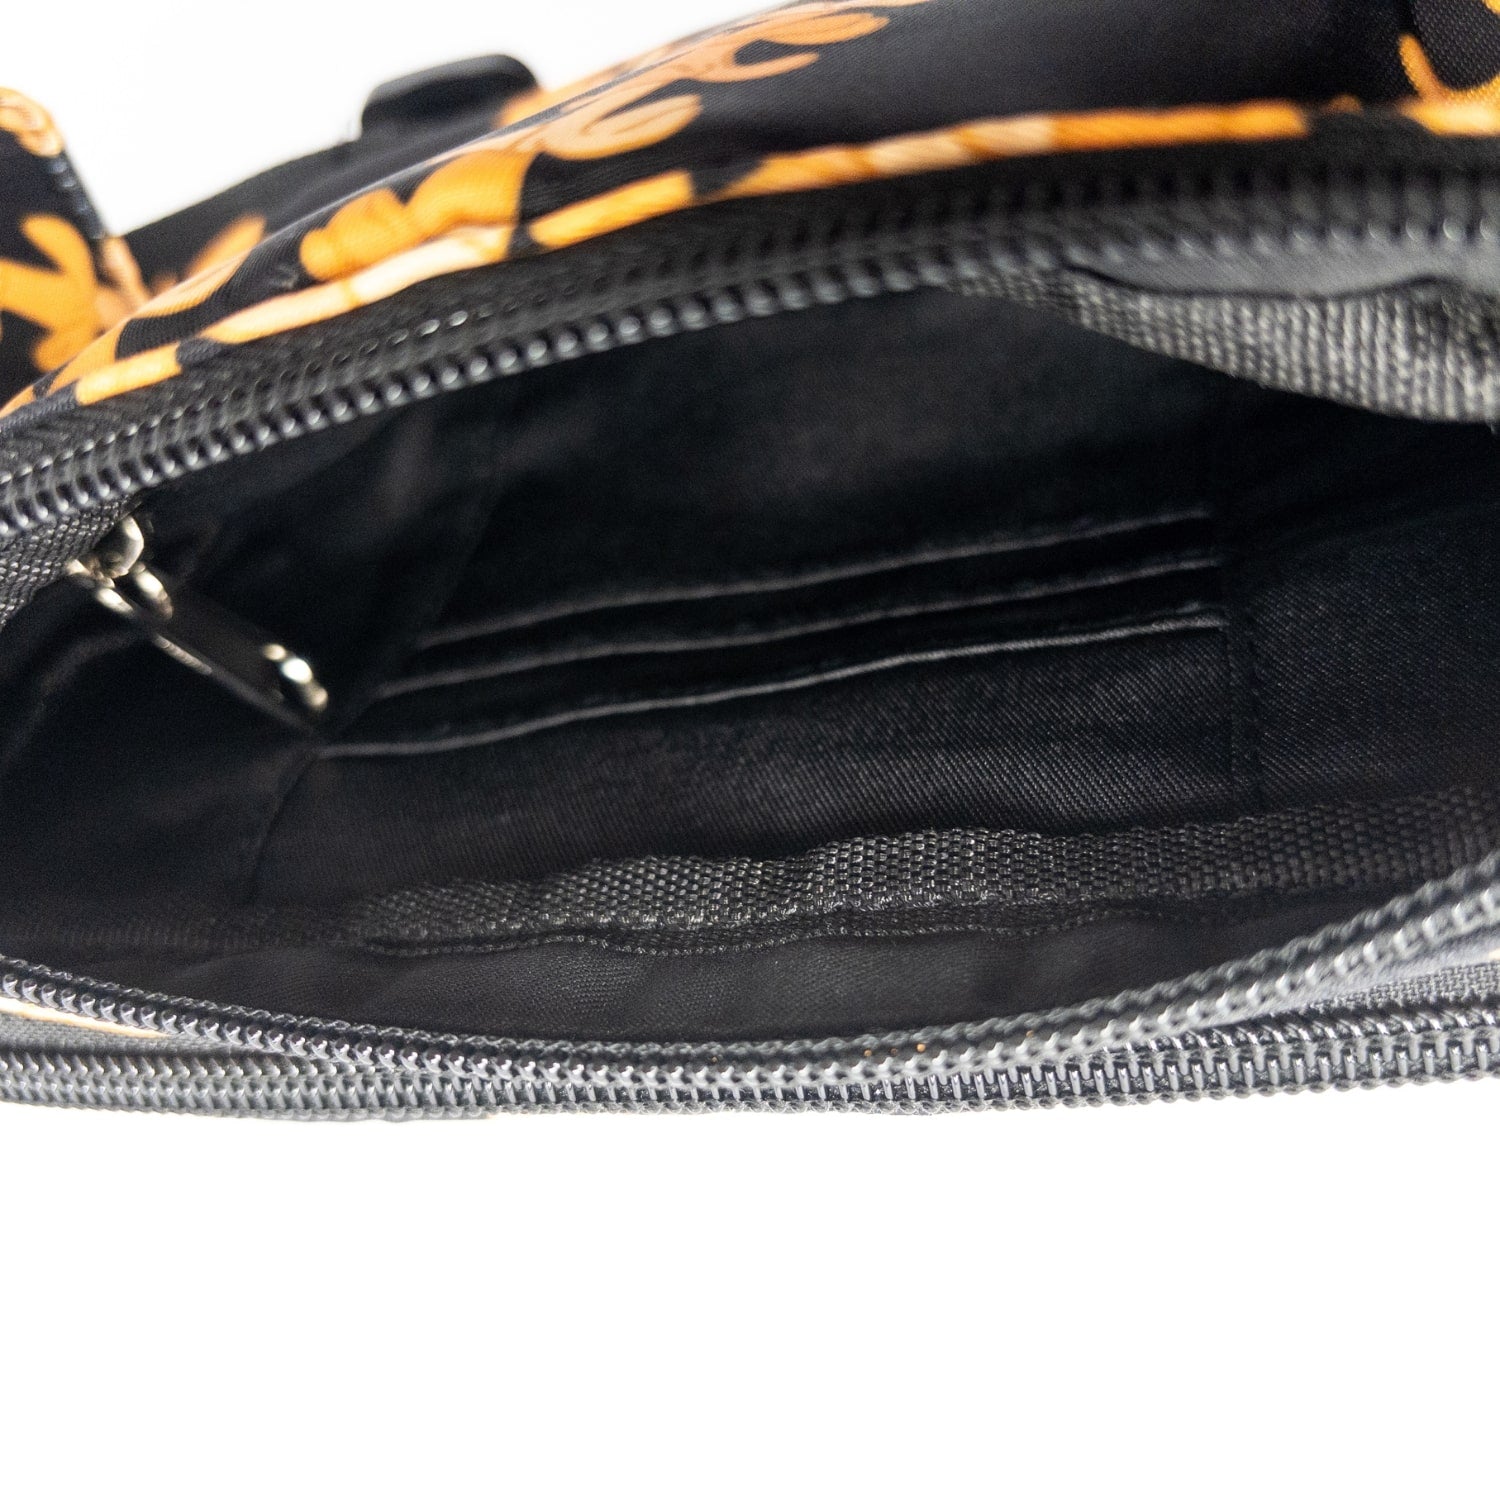 fanny pack, waist bag, belt bag, chest bag, hip pack, crossbody in orange pua kenikeni lei on black from Puakenikeni Designs top view inside 3 card slots